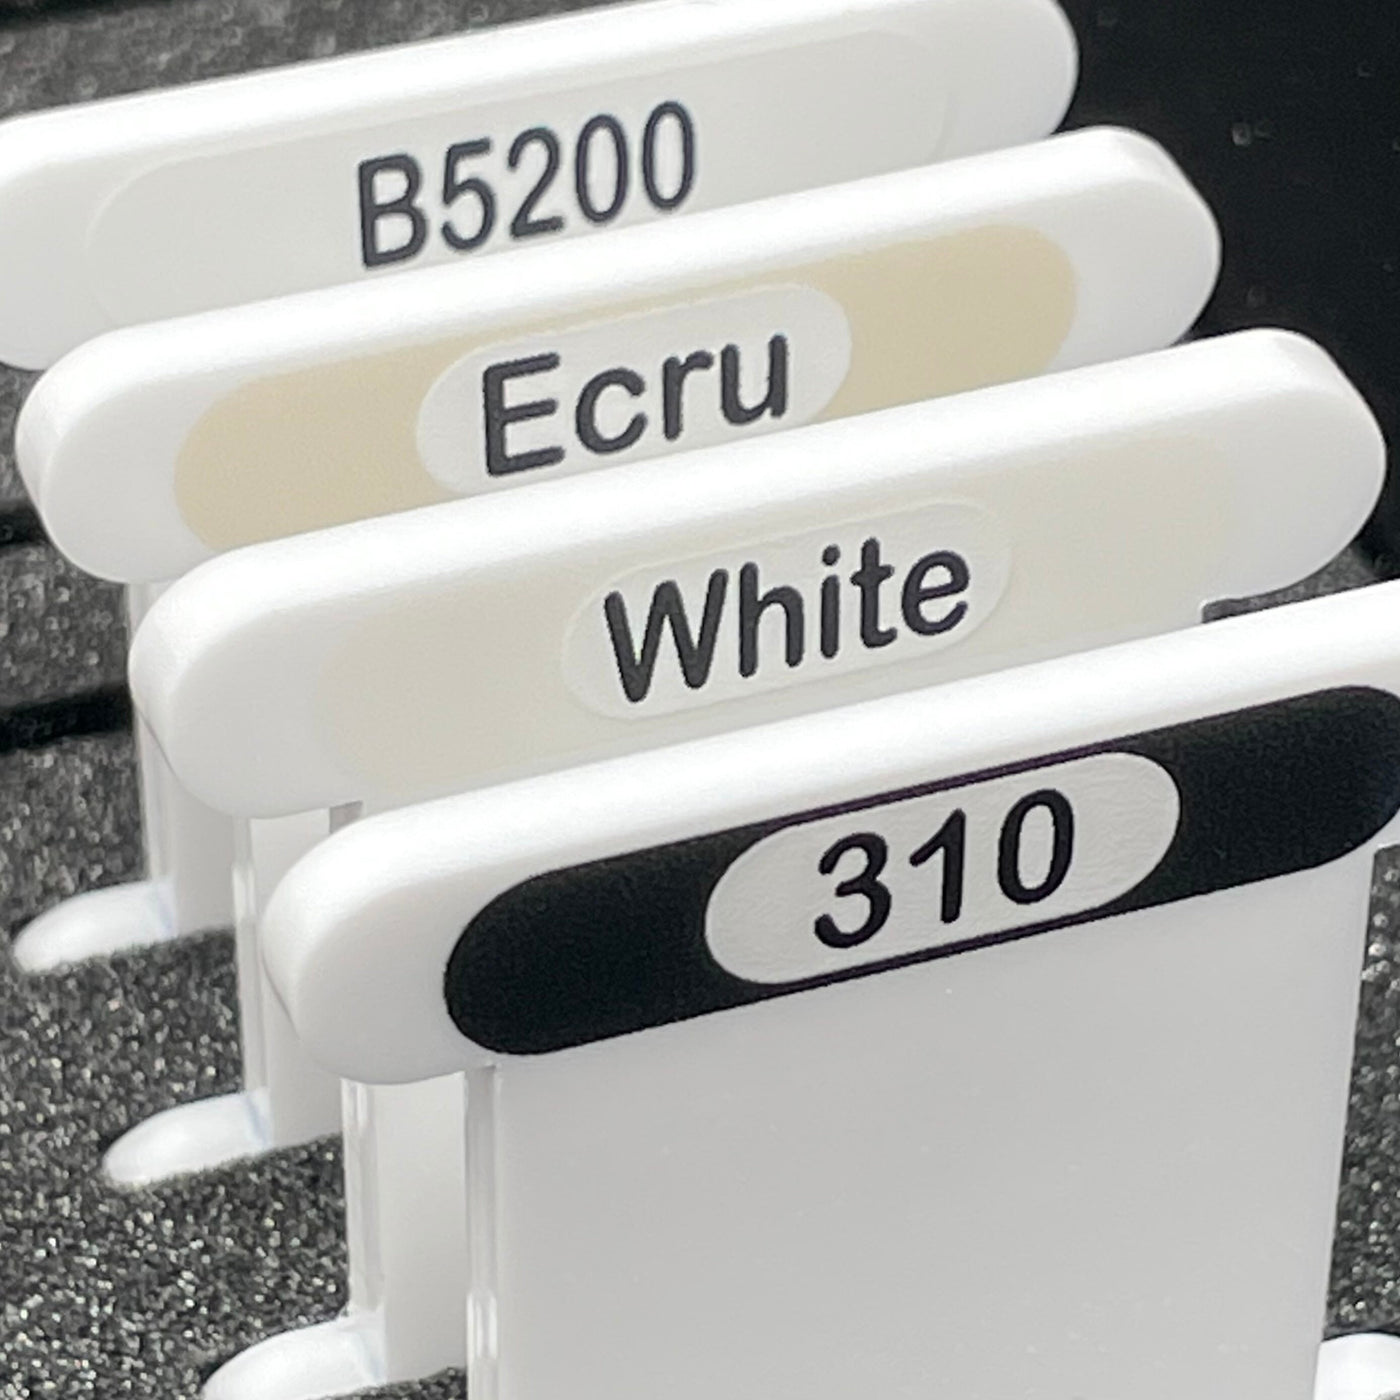 BLACK & WHITES - acrylic bobbins for DMC 310, Ecru, White and B5200 (x24 bobbins)